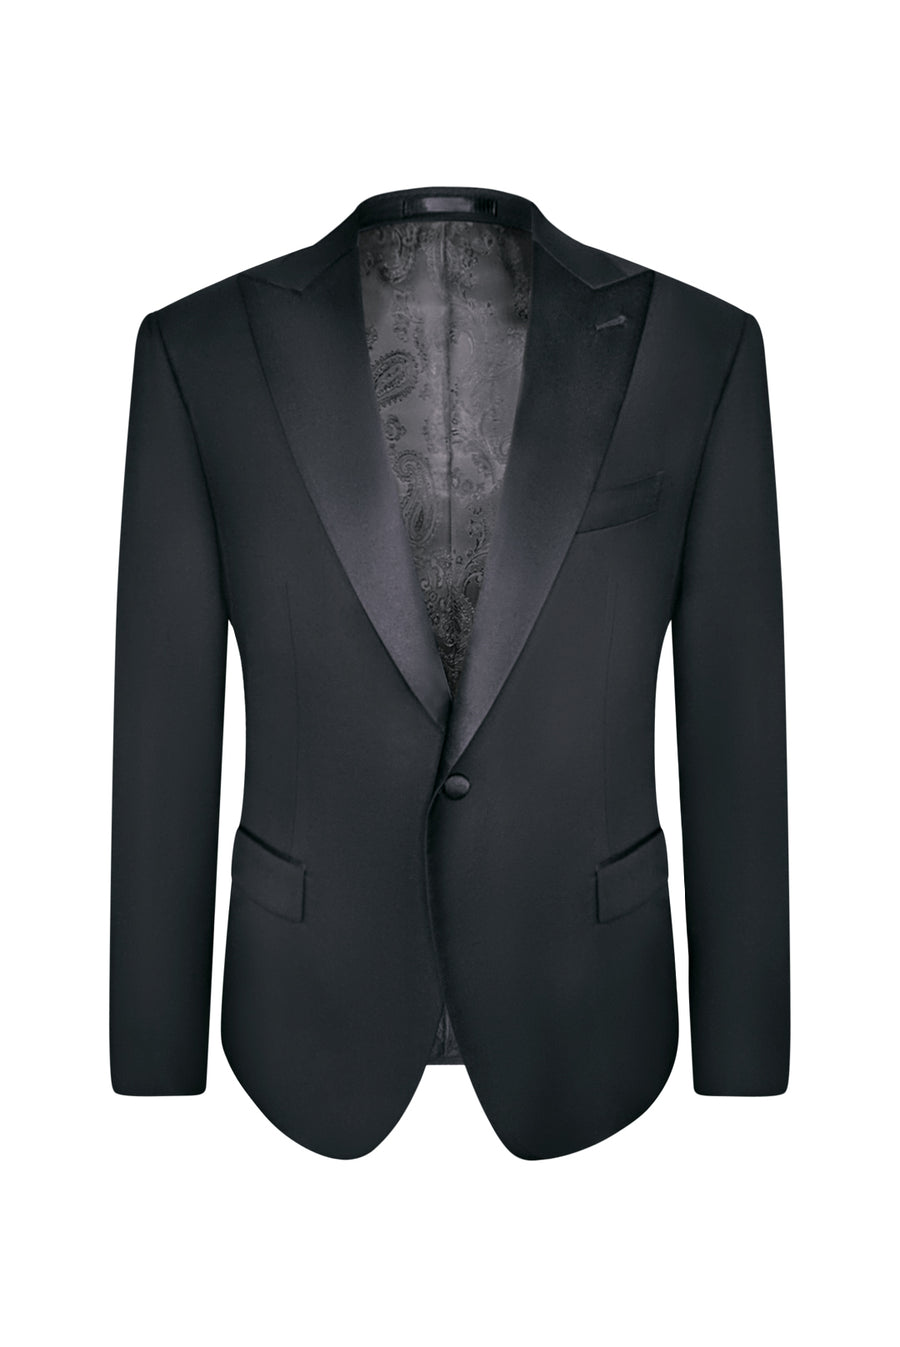 Midnight Black Slim Fit Peak Lapel Tuxedo Jacket (Satin Lapel)